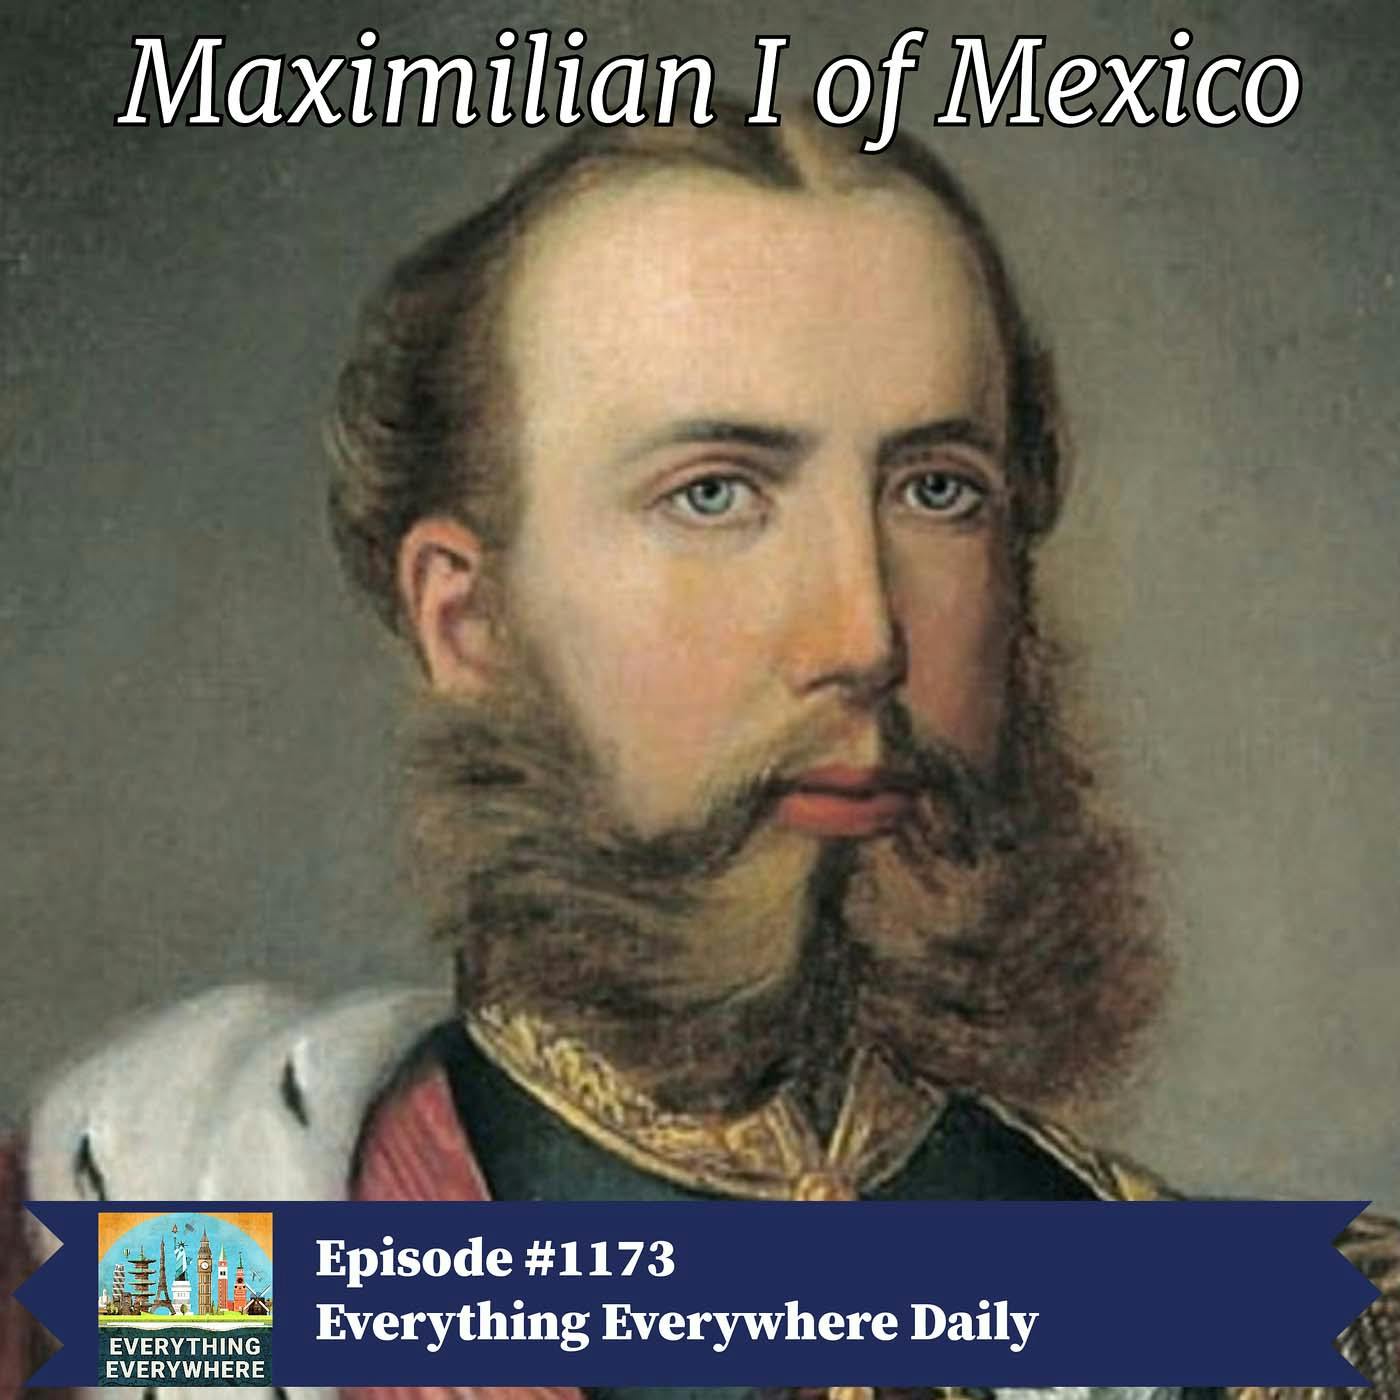 Emperor Maximillian I of Mexico